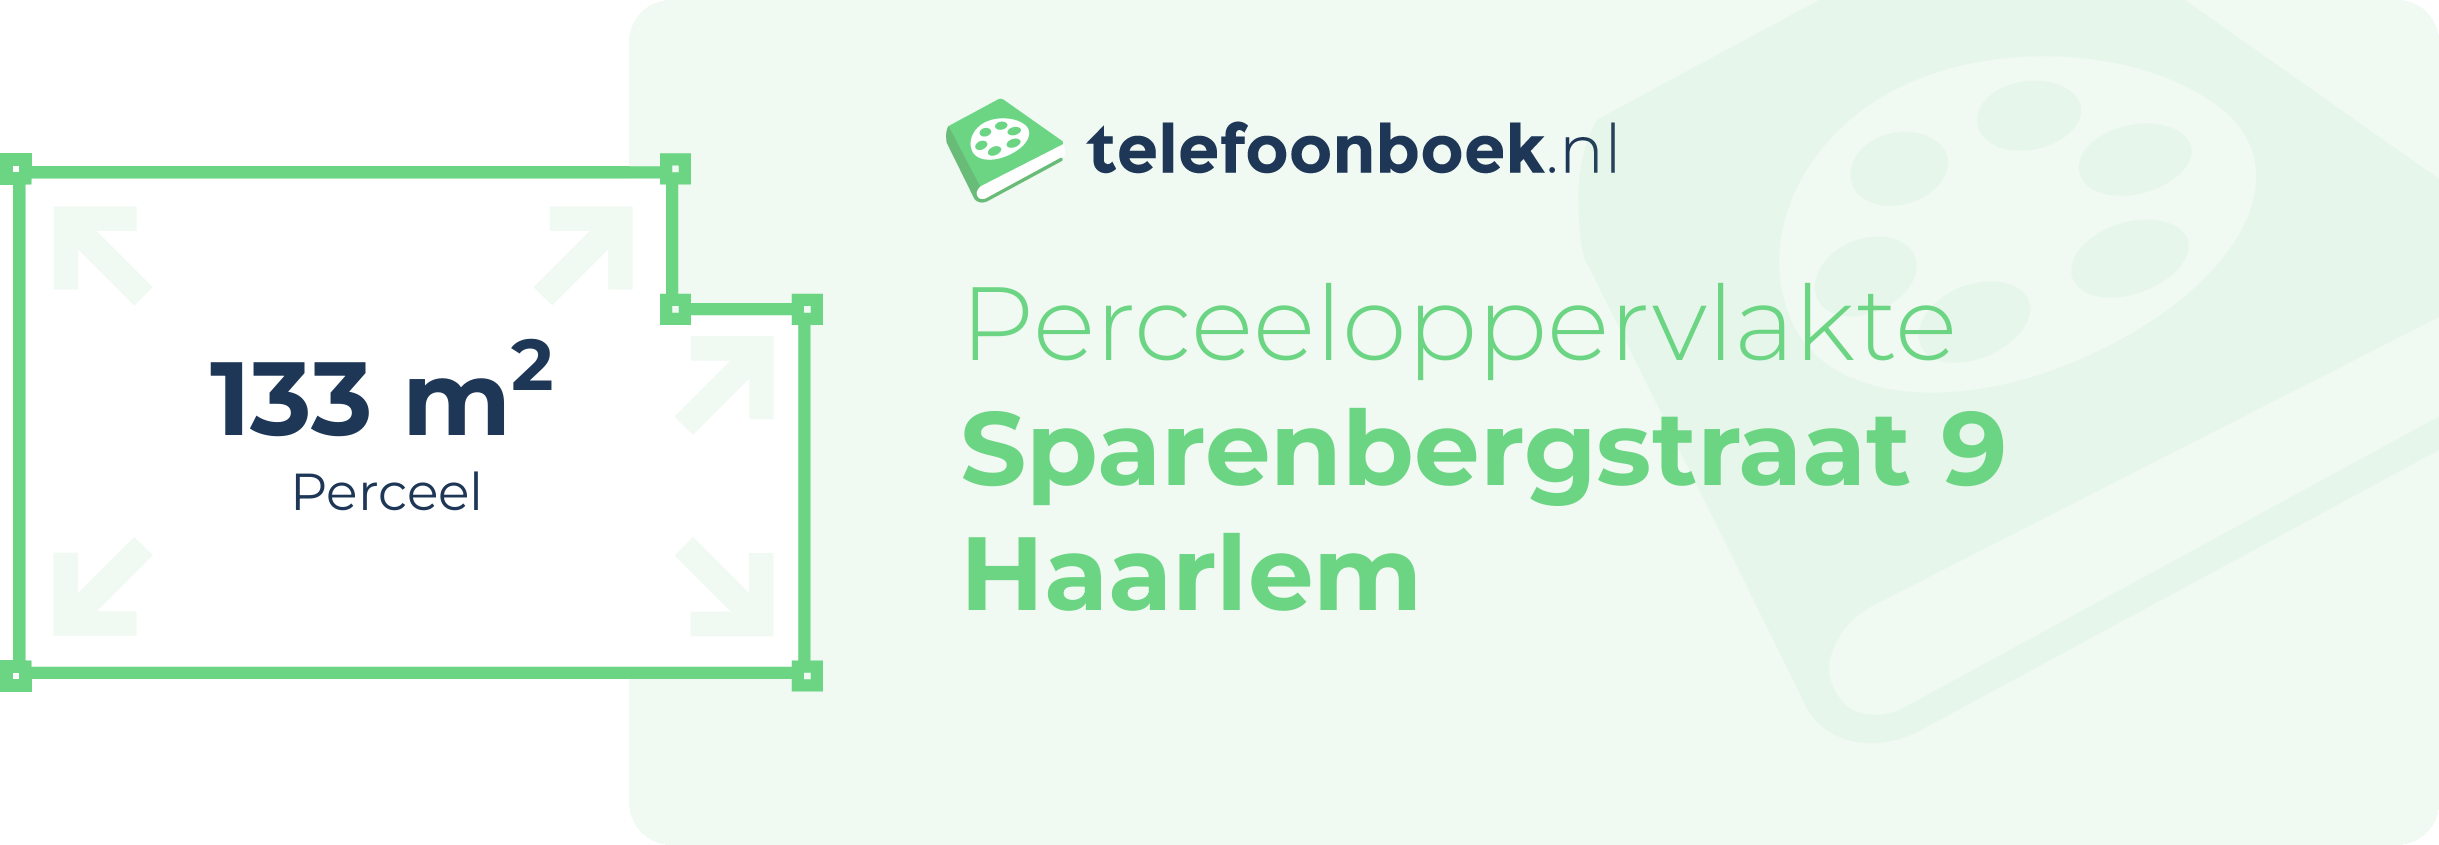 Perceeloppervlakte Sparenbergstraat 9 Haarlem